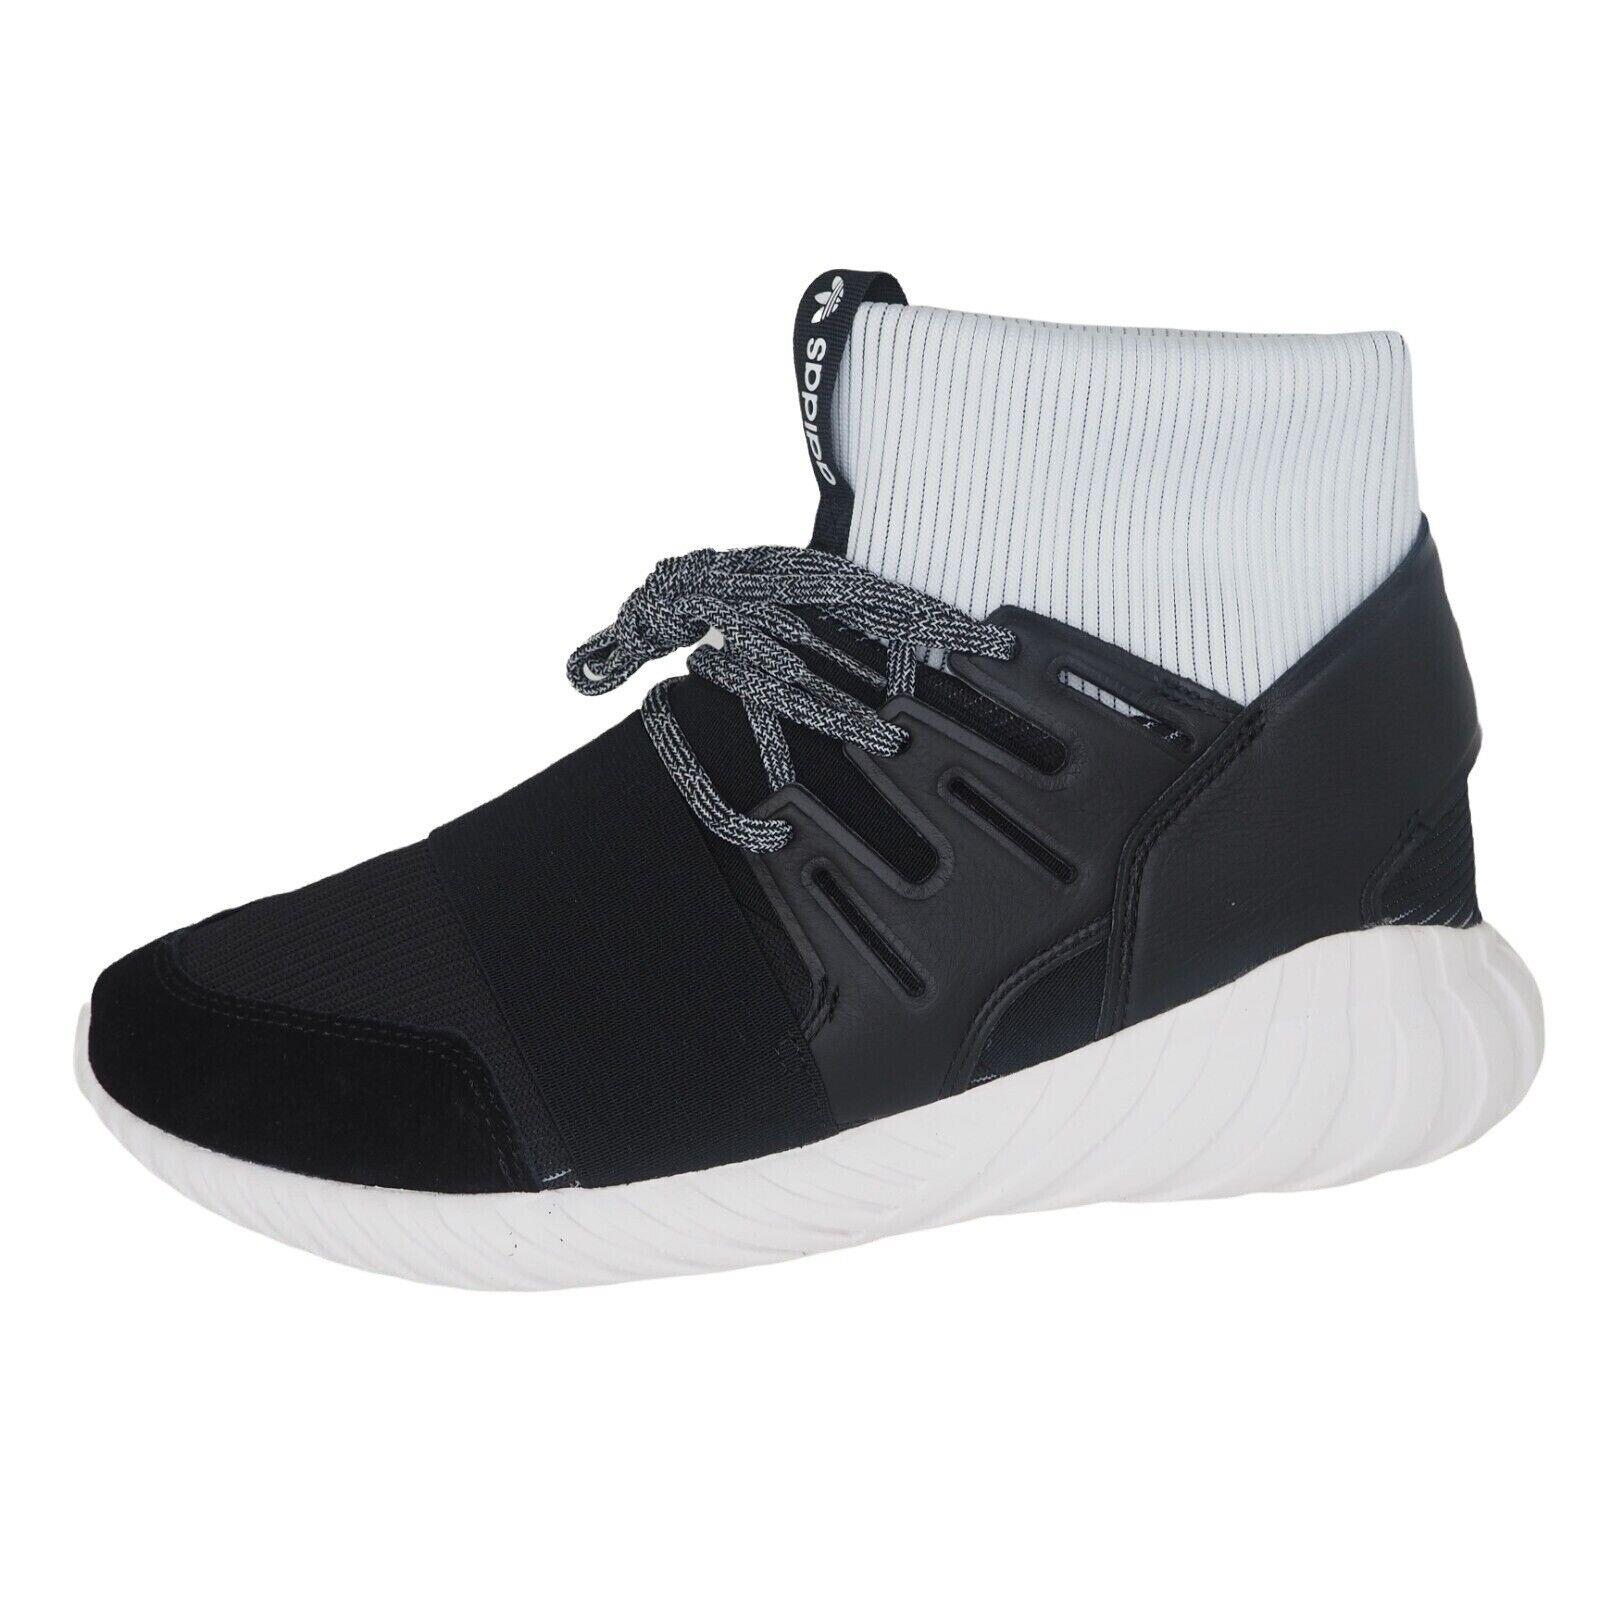 Adidas Originals Tubular Doom BA7555 Athletic Men Sneakers Shoes Black SZ 10.5